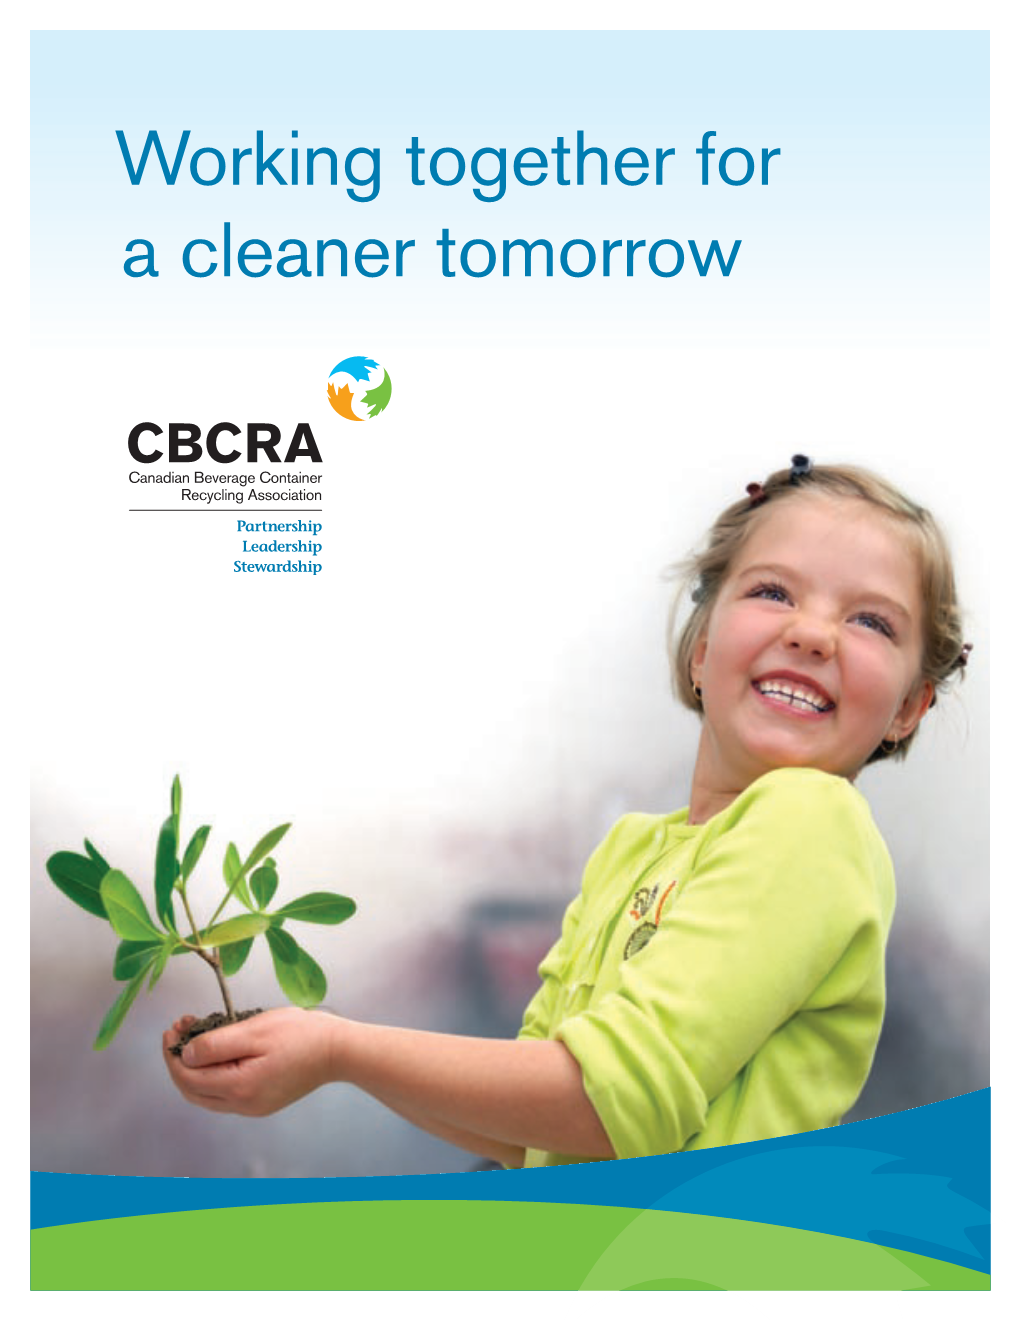 Working Together for a Cleaner Tomorrow 210-283 Bannatyne Avenue Winnipeg, MB R3B 3B2 Toll-Free: 1-877-810-7362 Tel: 204-942-2284